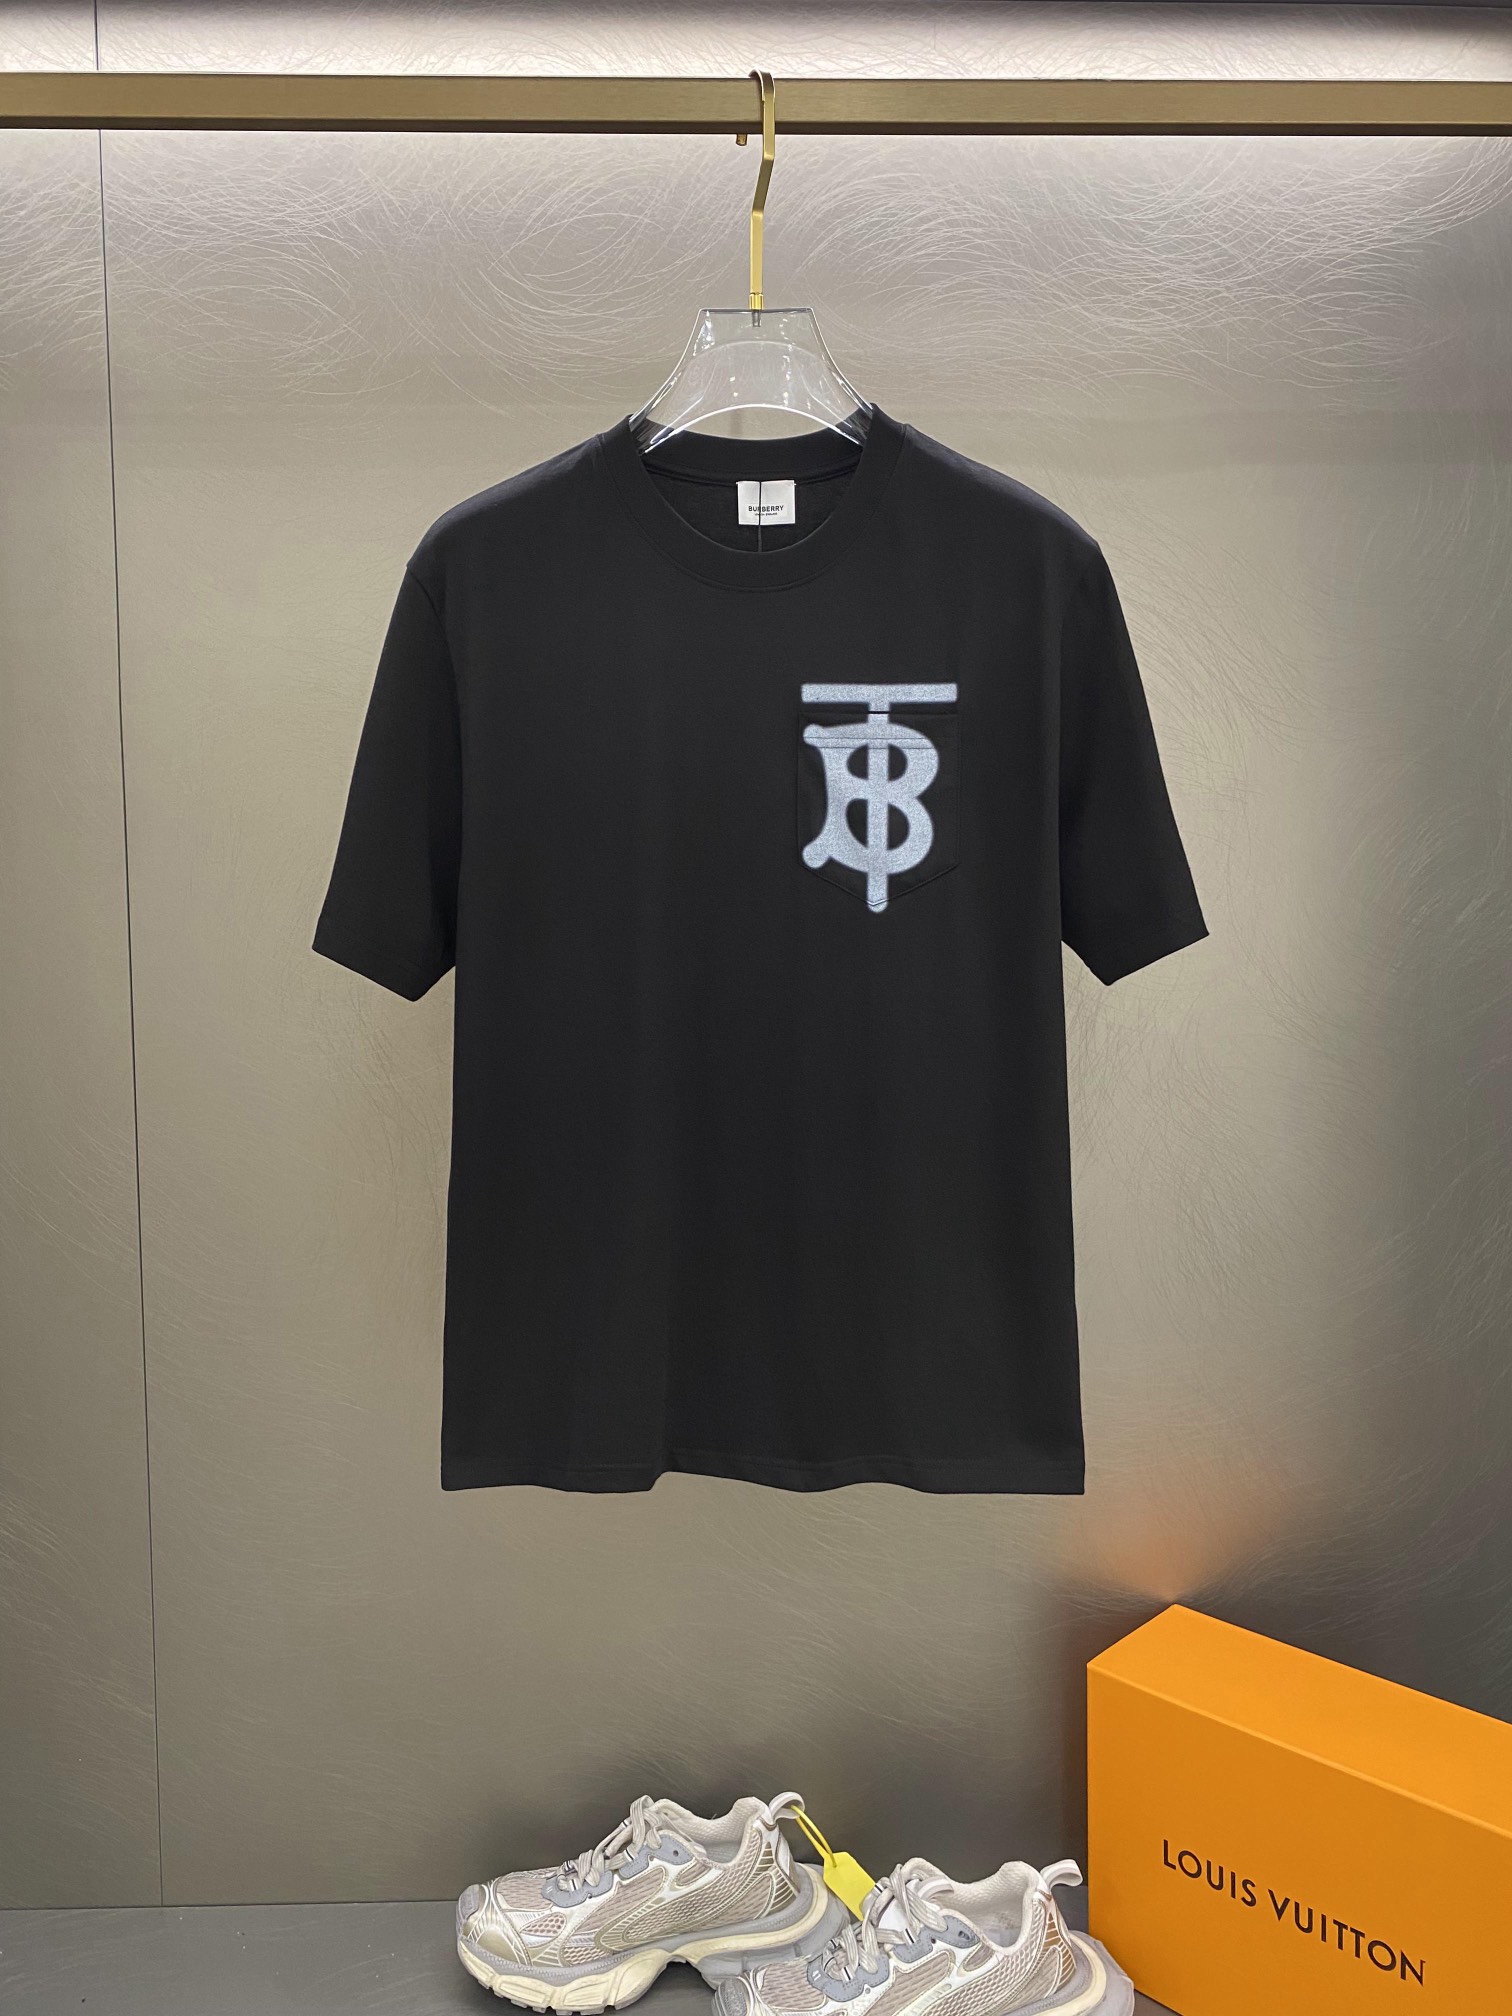 Burberry Clothing T-Shirt Black White Printing Cotton Fashion Short Sleeve